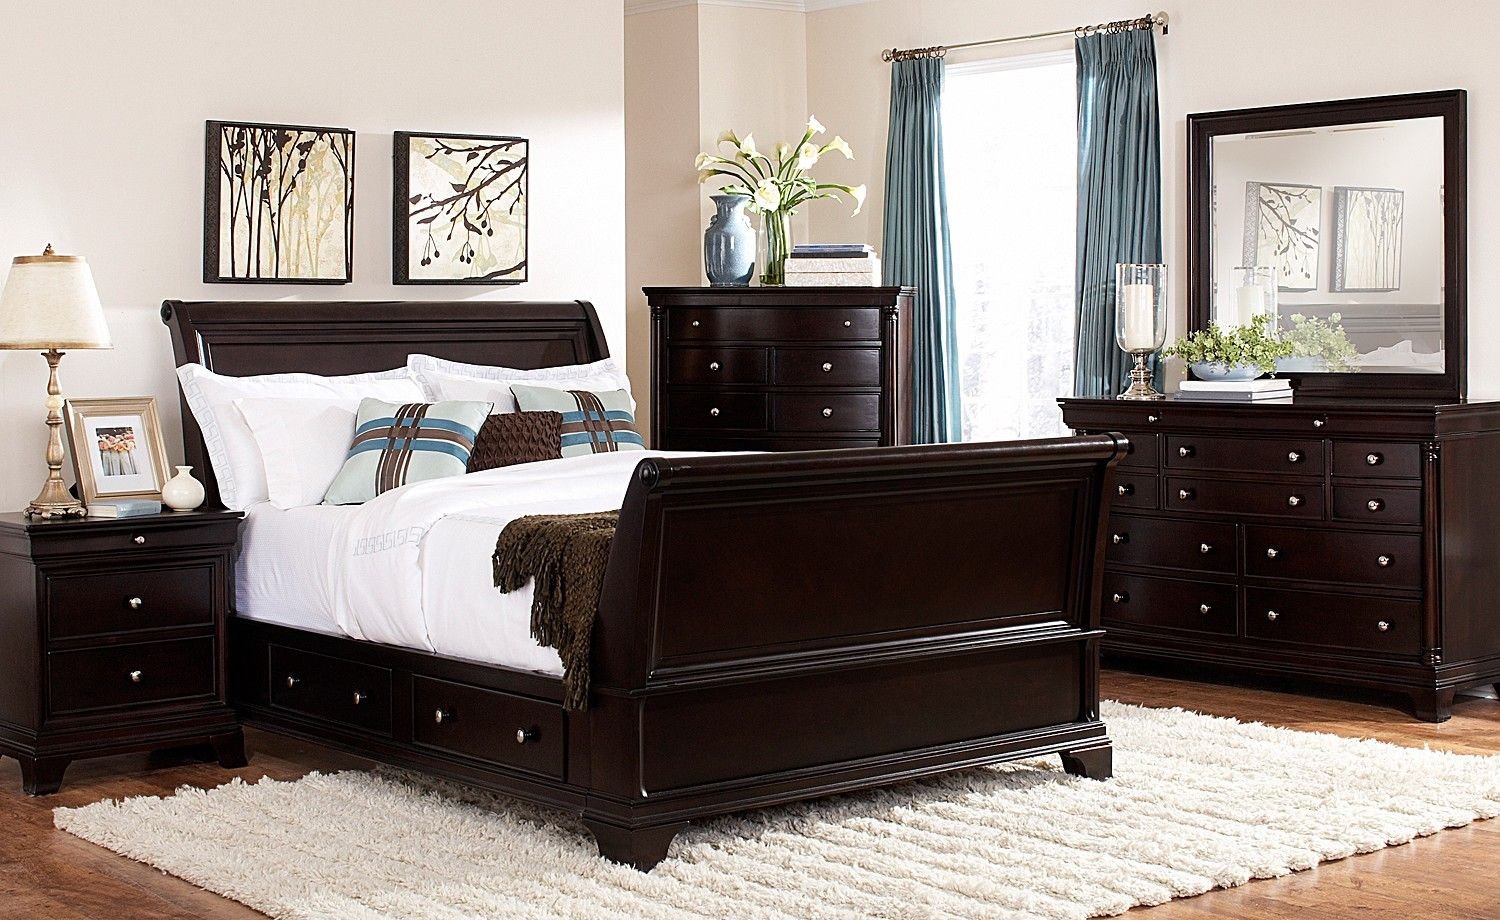 Affordable King Bedroom Set New Lakeshore Bedroom 7 Pc Queen Storage Bedroom Furniture